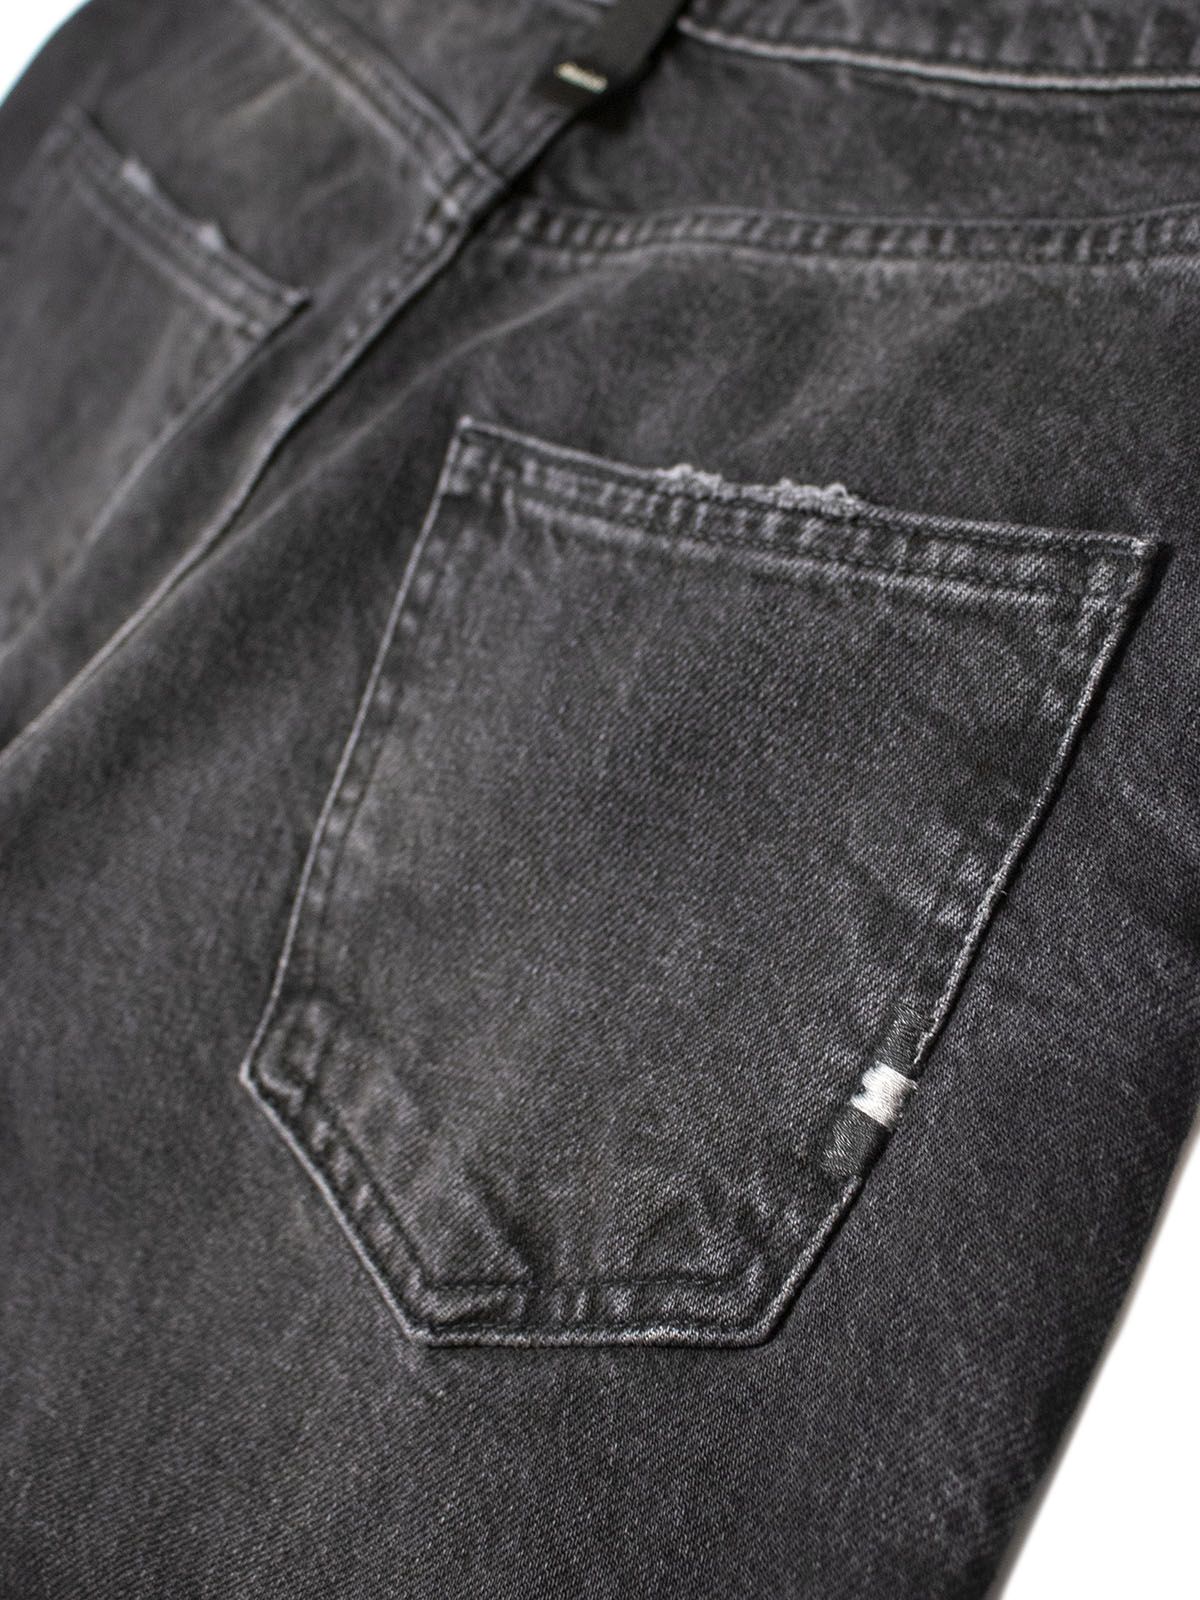 Jeans Donna Amish - Jenny Recycled Black Denim Vintage Jeans - Nero